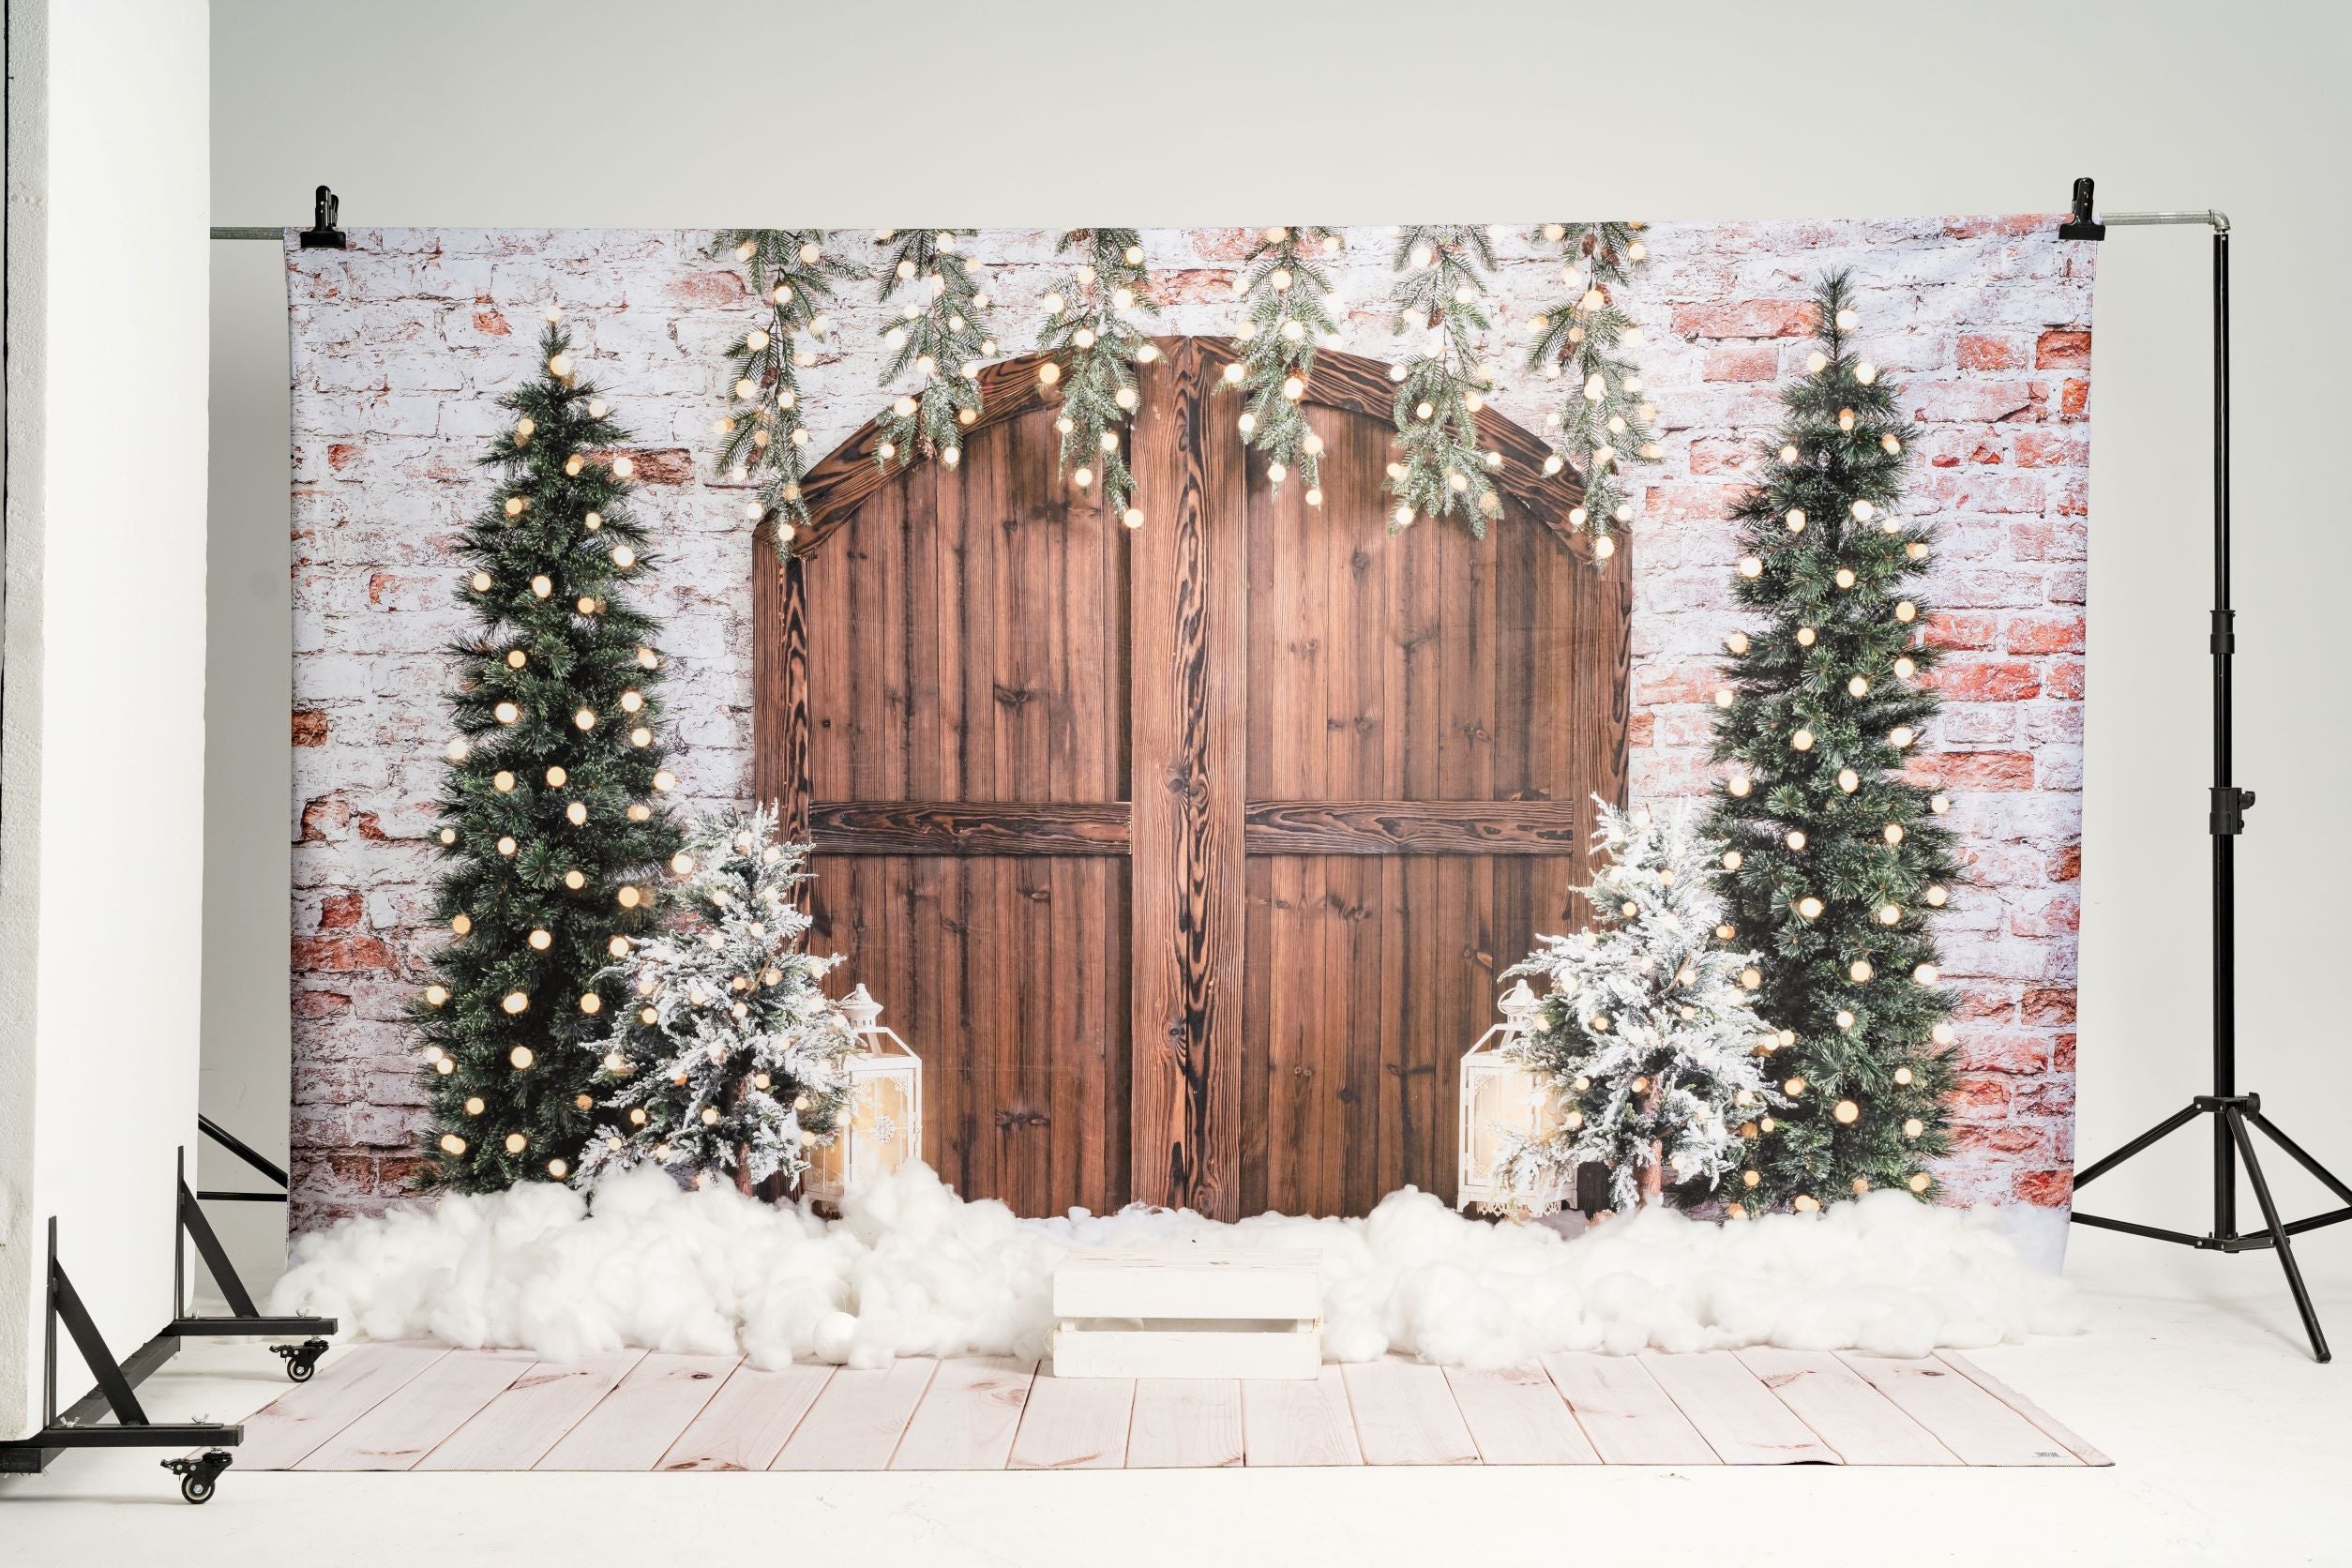 Kate Christmas Backdrop Winter Brick Wall Barn Door Designed by Emetselch